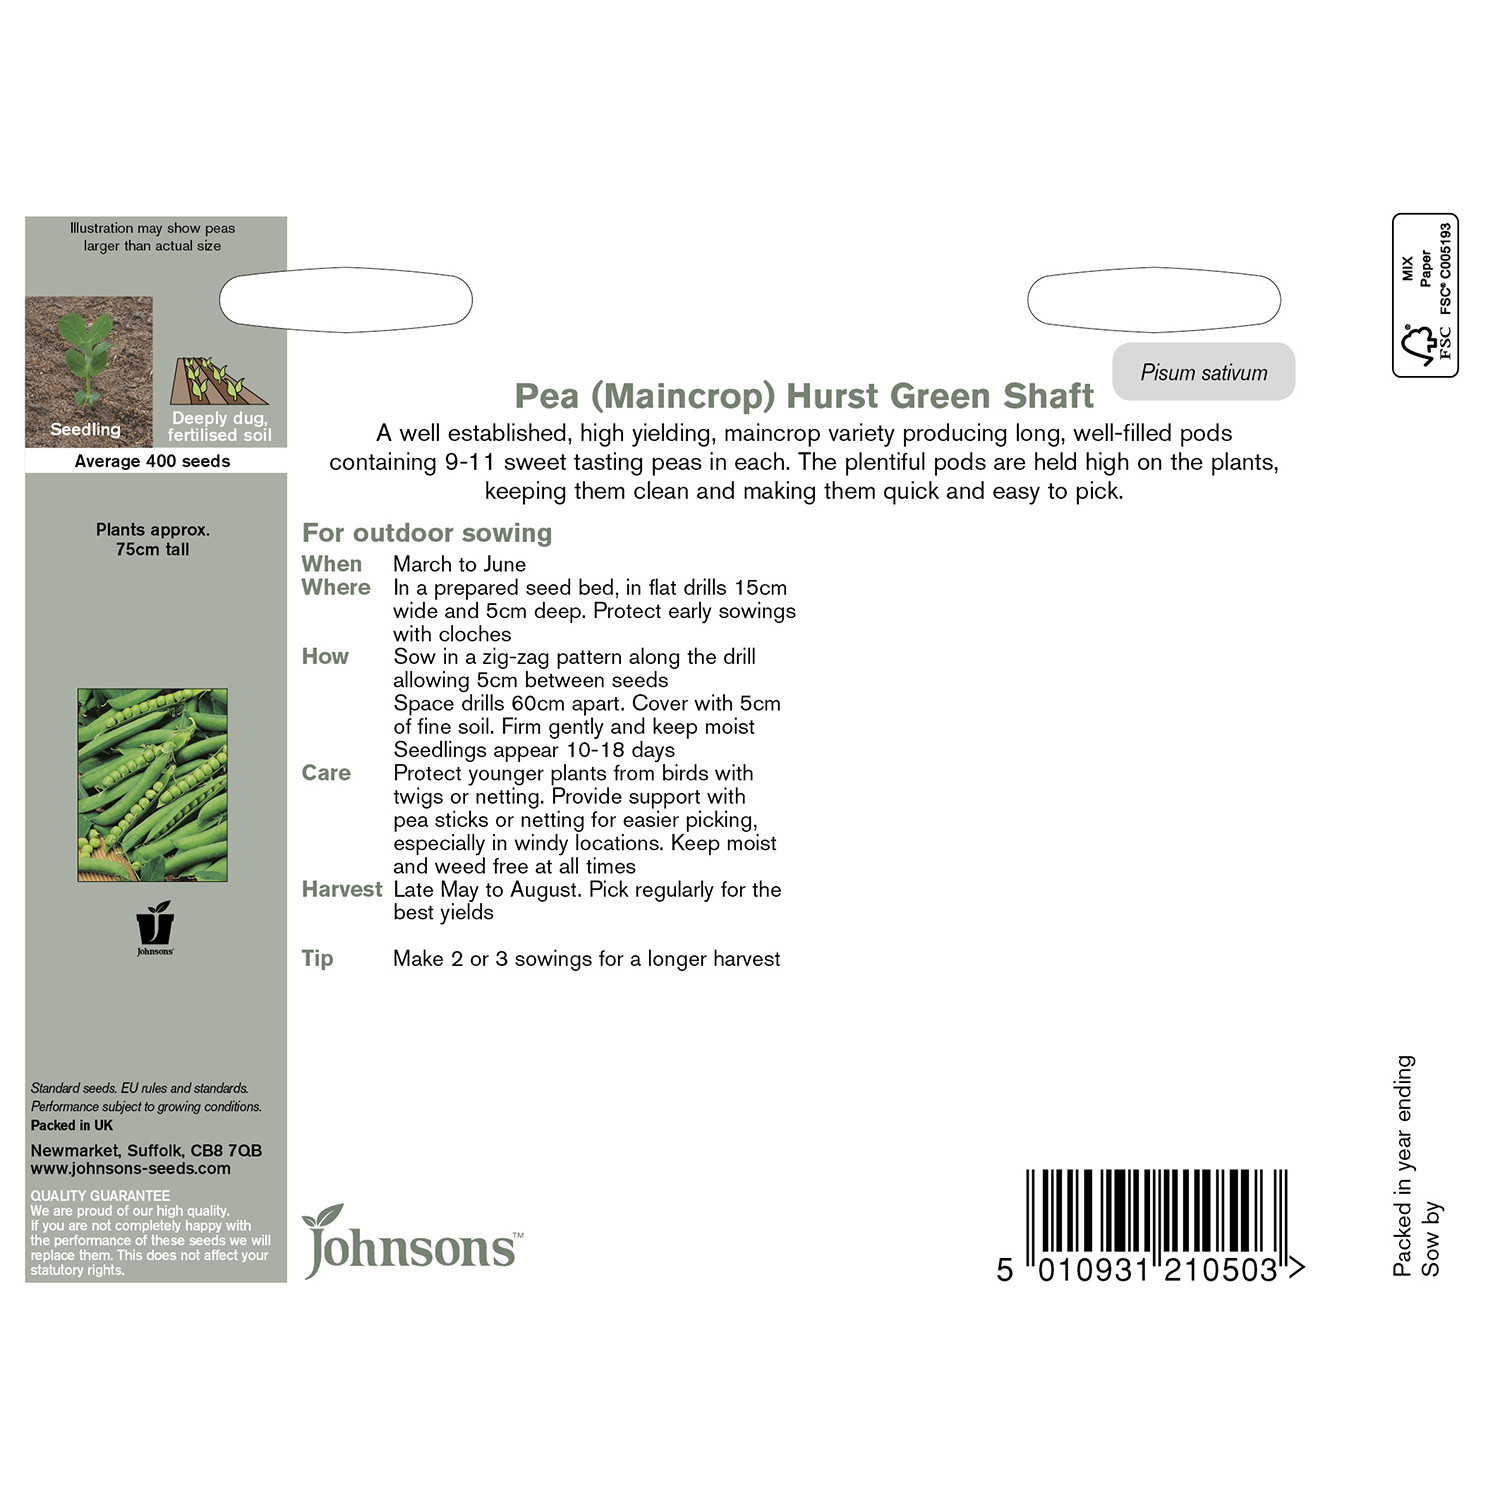 Johnsons Hurst Green Shaft Pea Seeds Image 3